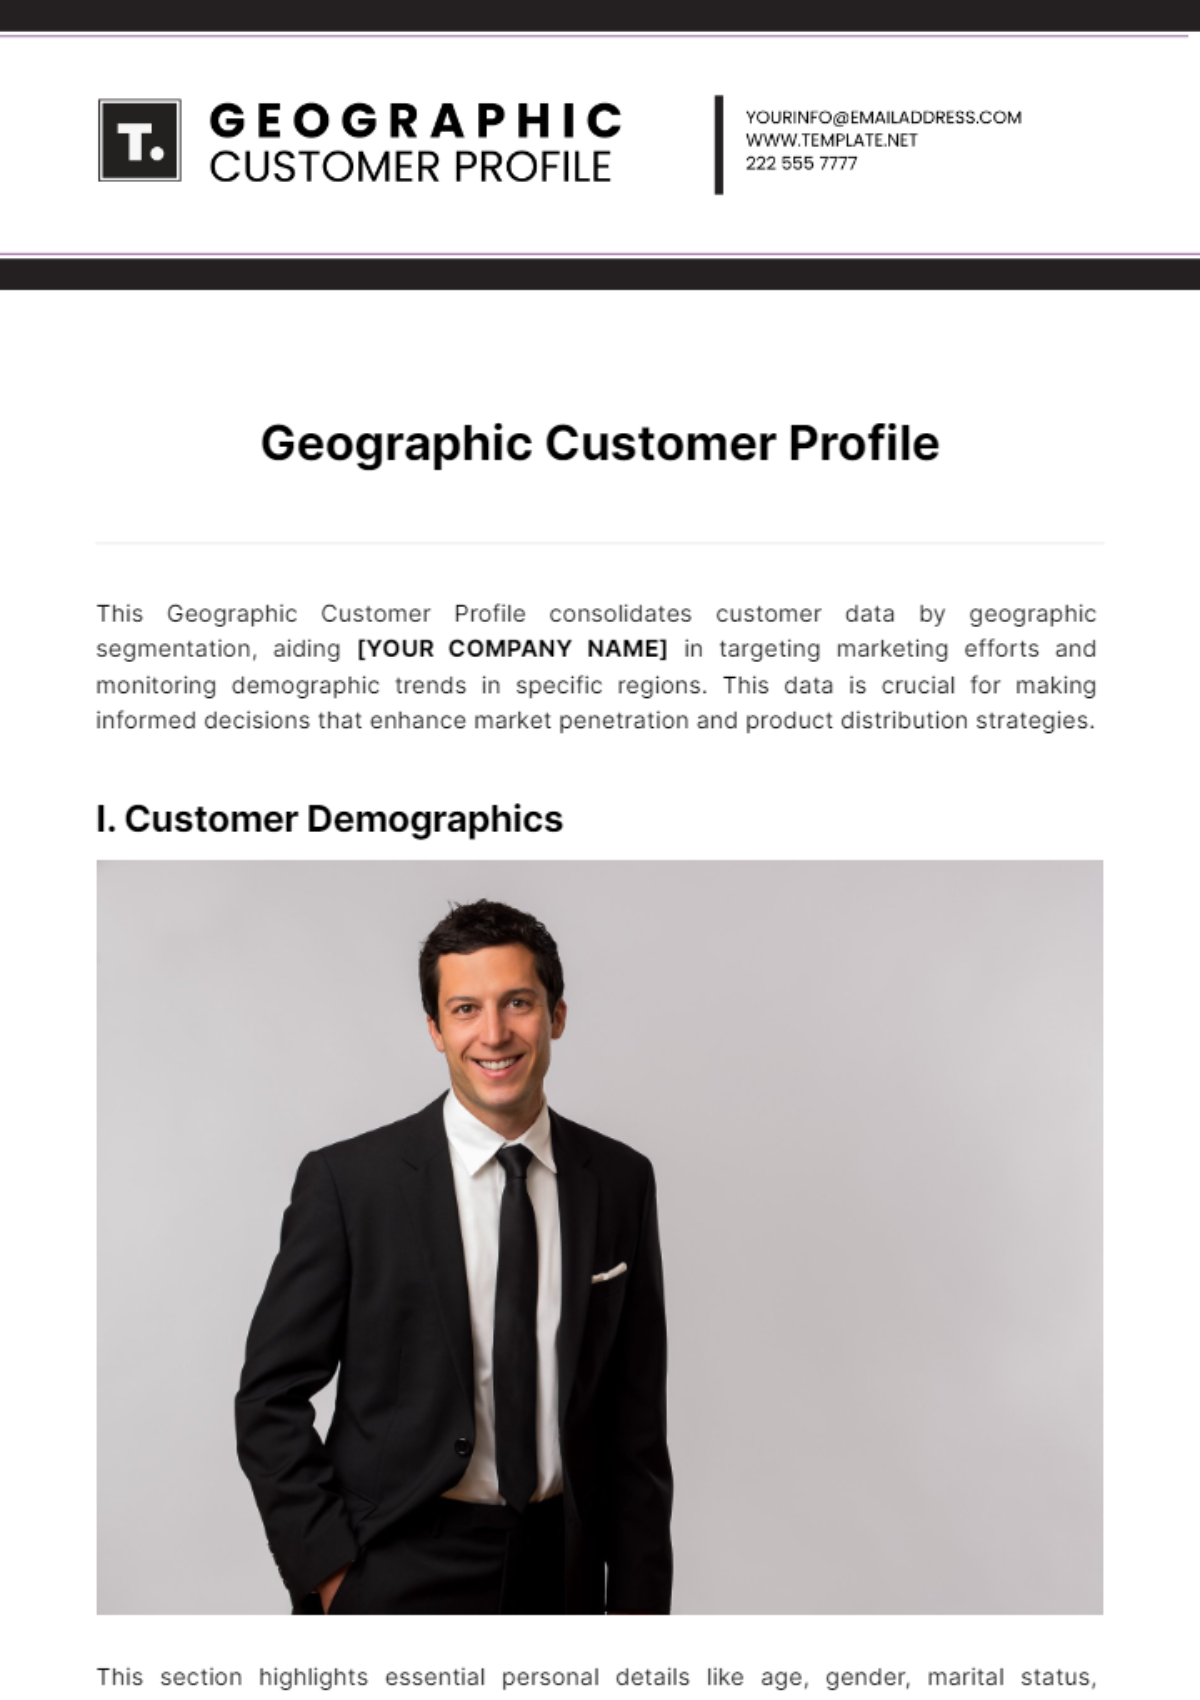 Geographic Customer Profile Template